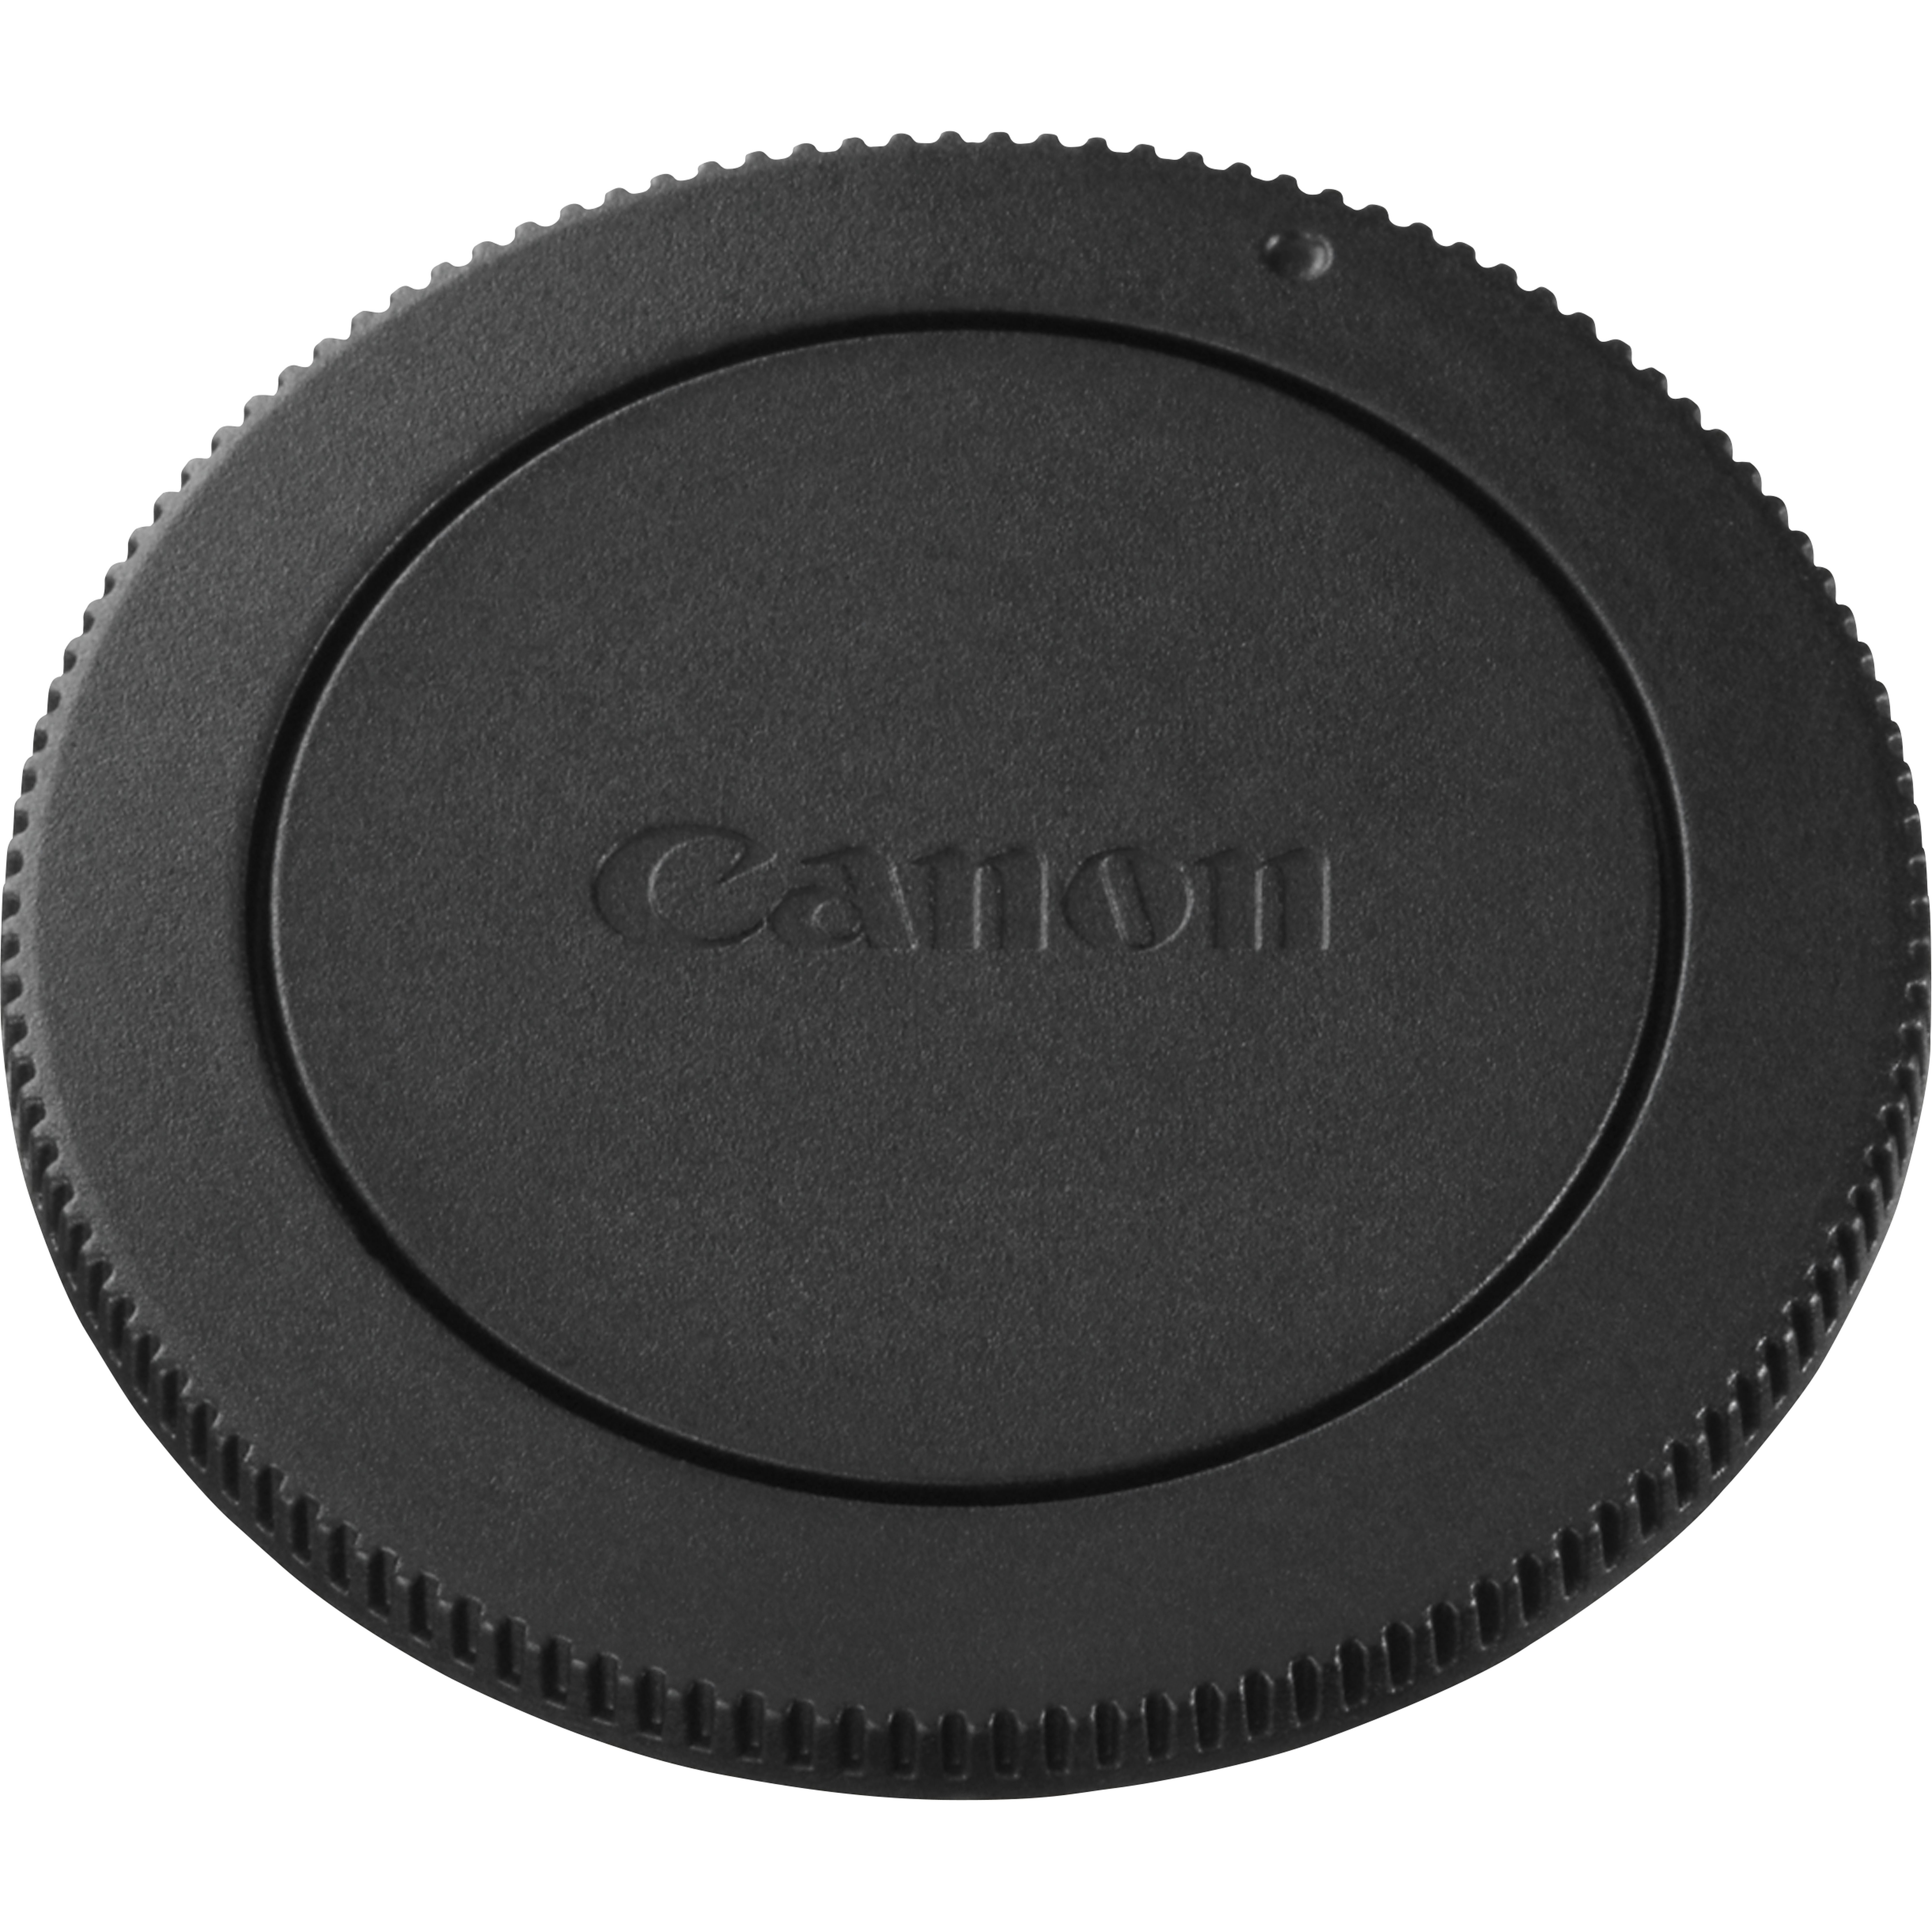 Canon Camera Cover R-F-5 - Kappe für Kameragehäuse